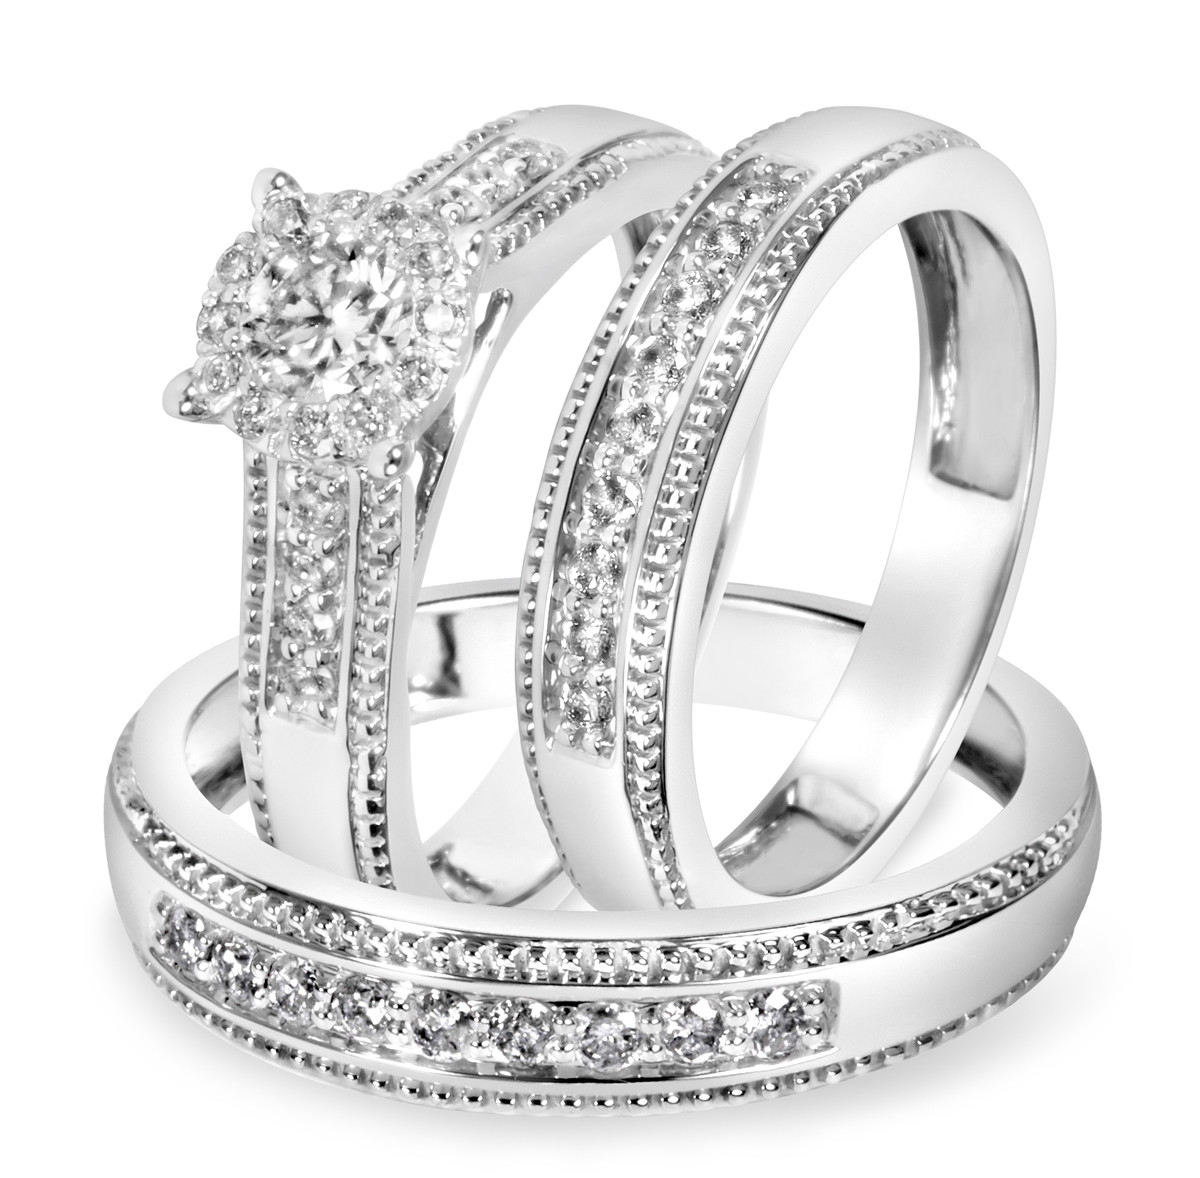 Matching Wedding Ring Sets
 7 8 Carat T W Diamond Trio Matching Wedding Ring Set 14K